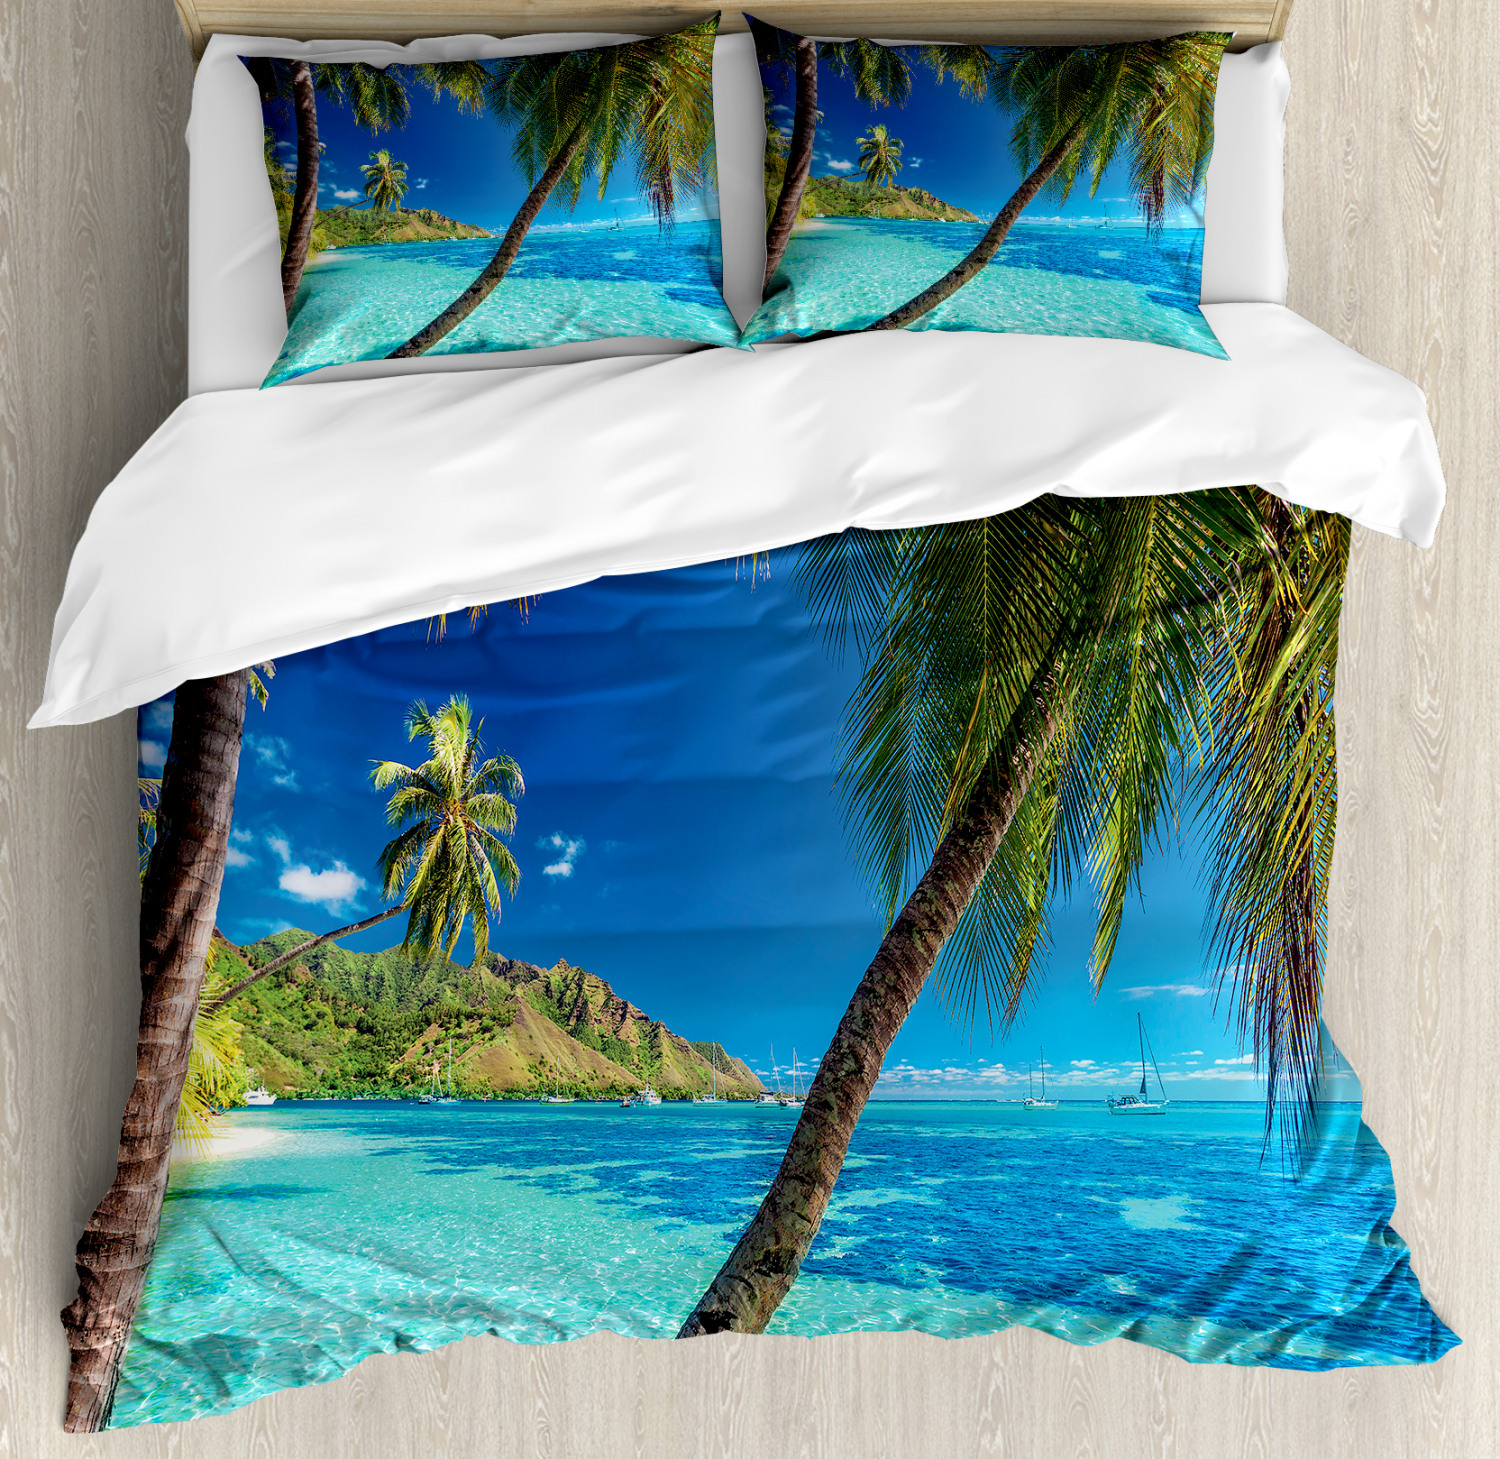 Tropical Duvet Cover Set With Pillow Shams Palm Trees Sea Beach